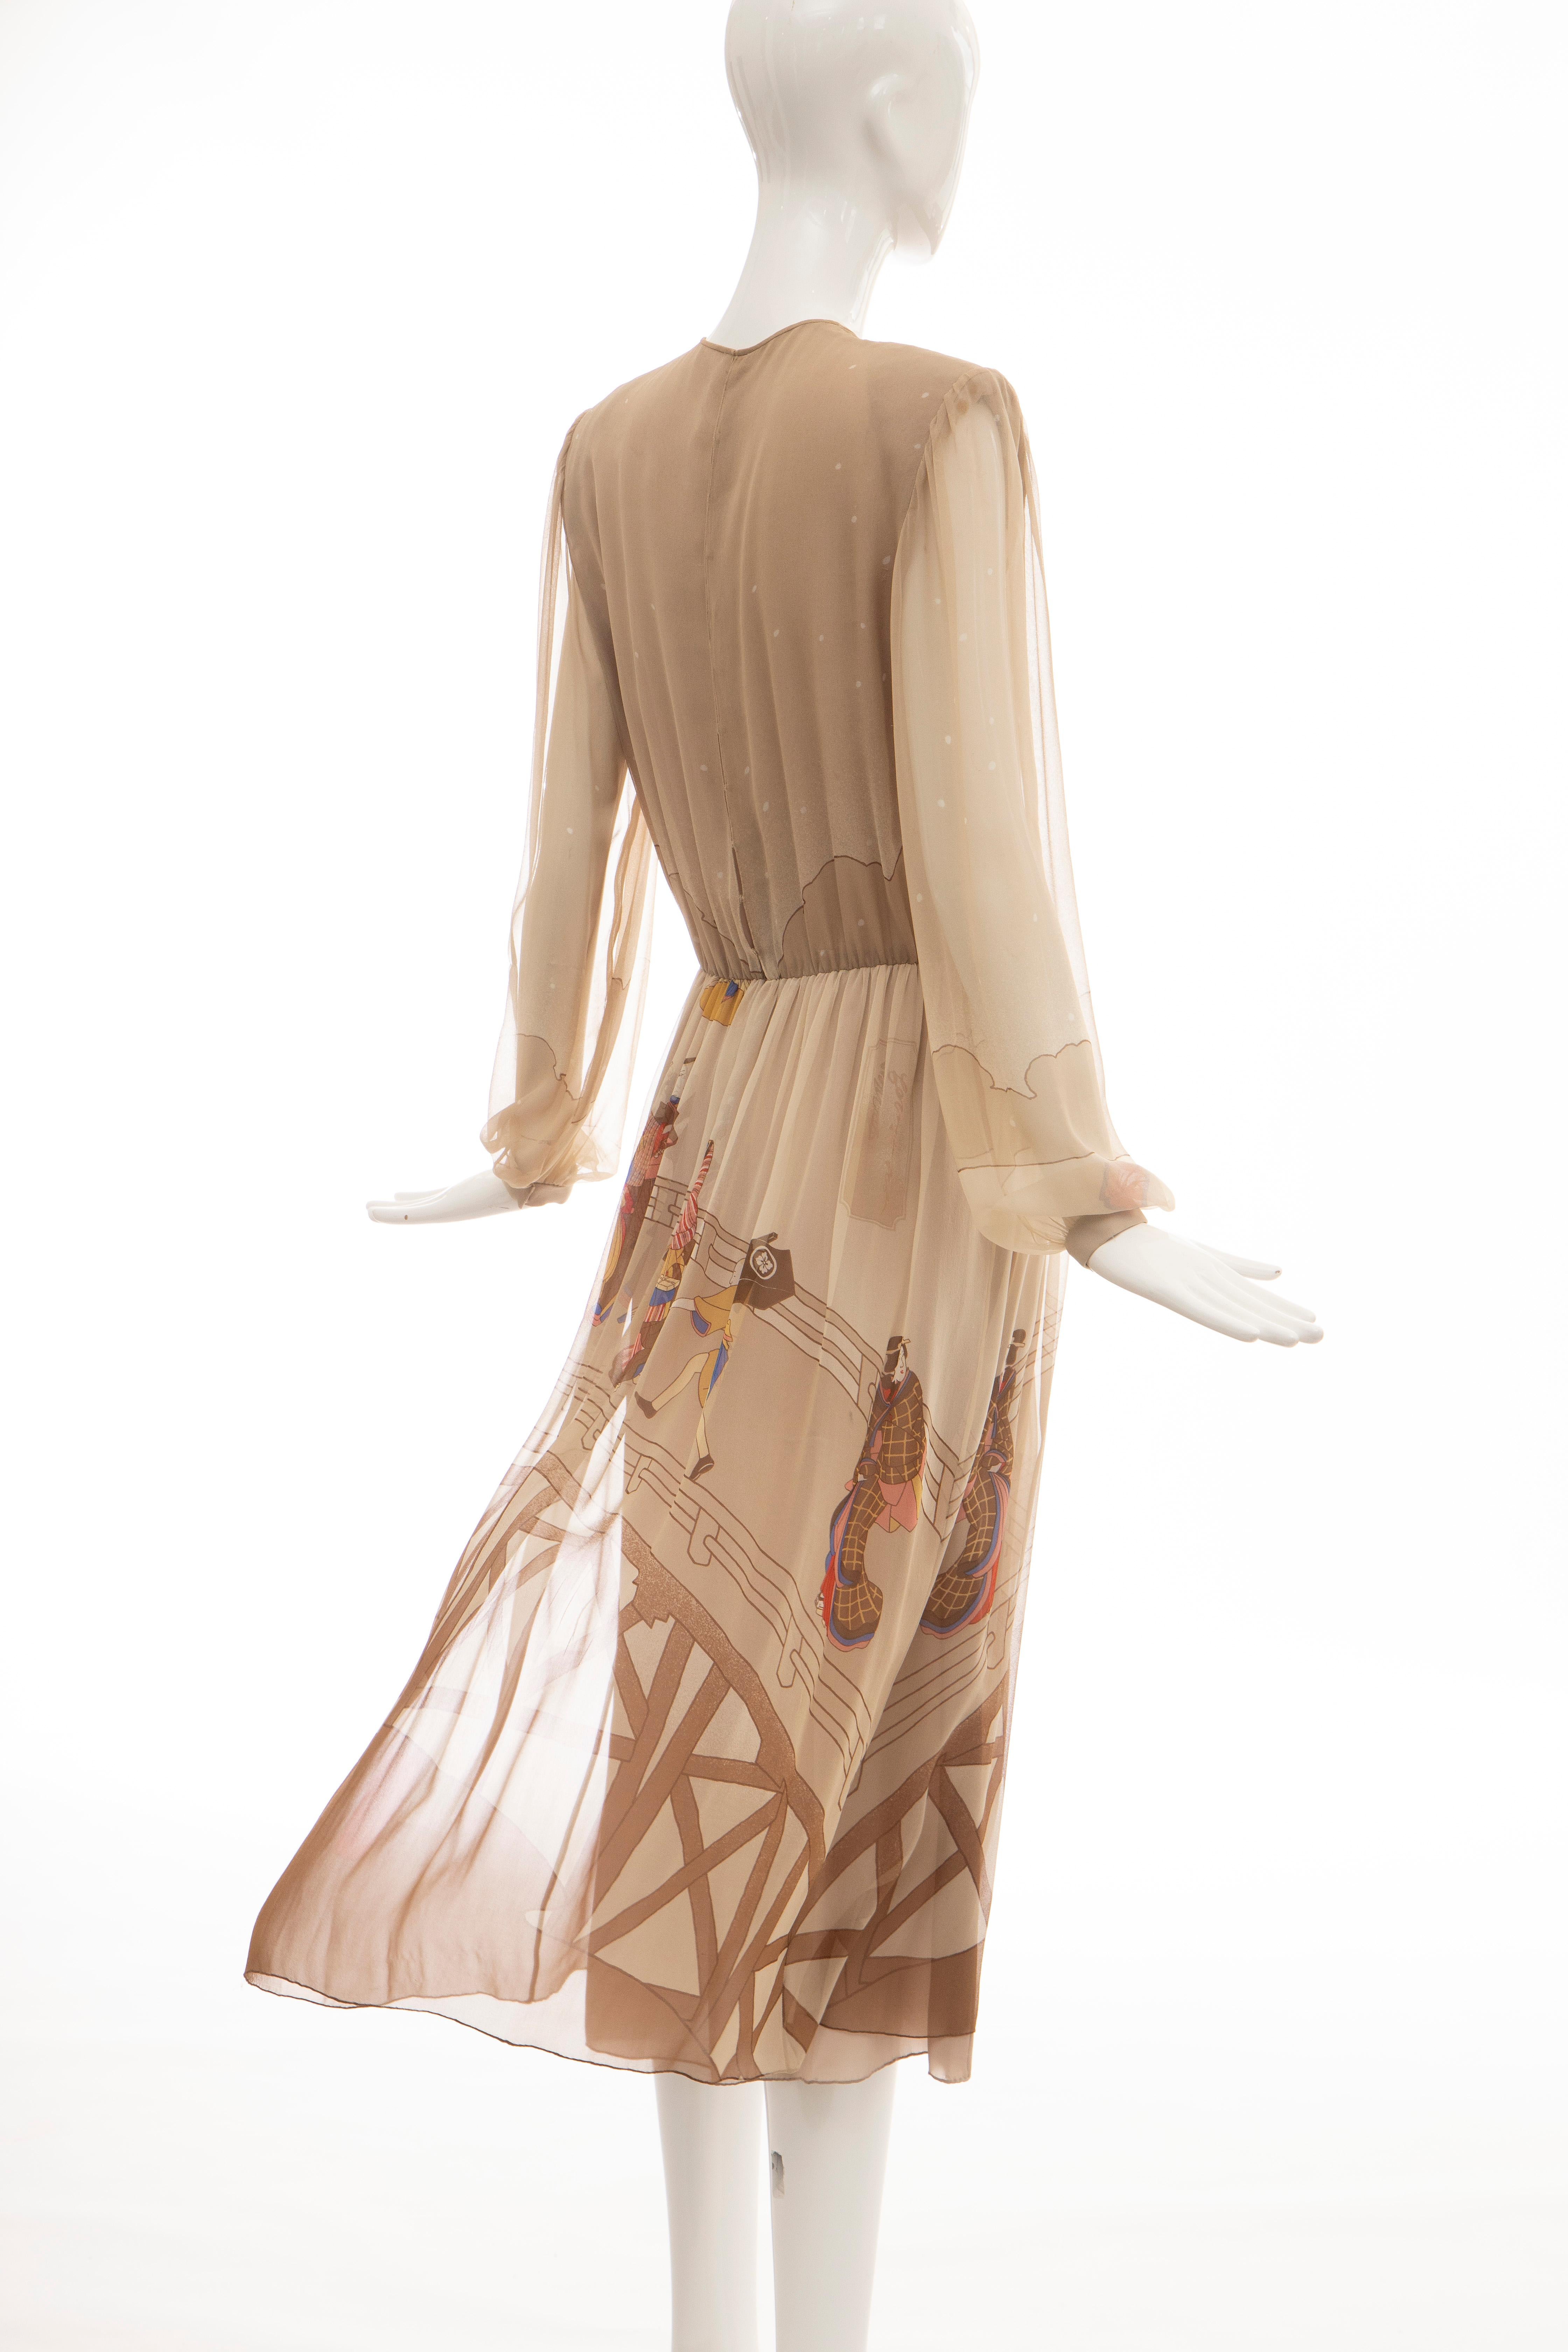 Hanae Mori Printed Geisha Silk Chiffon Dress, Circa: 1970's 2